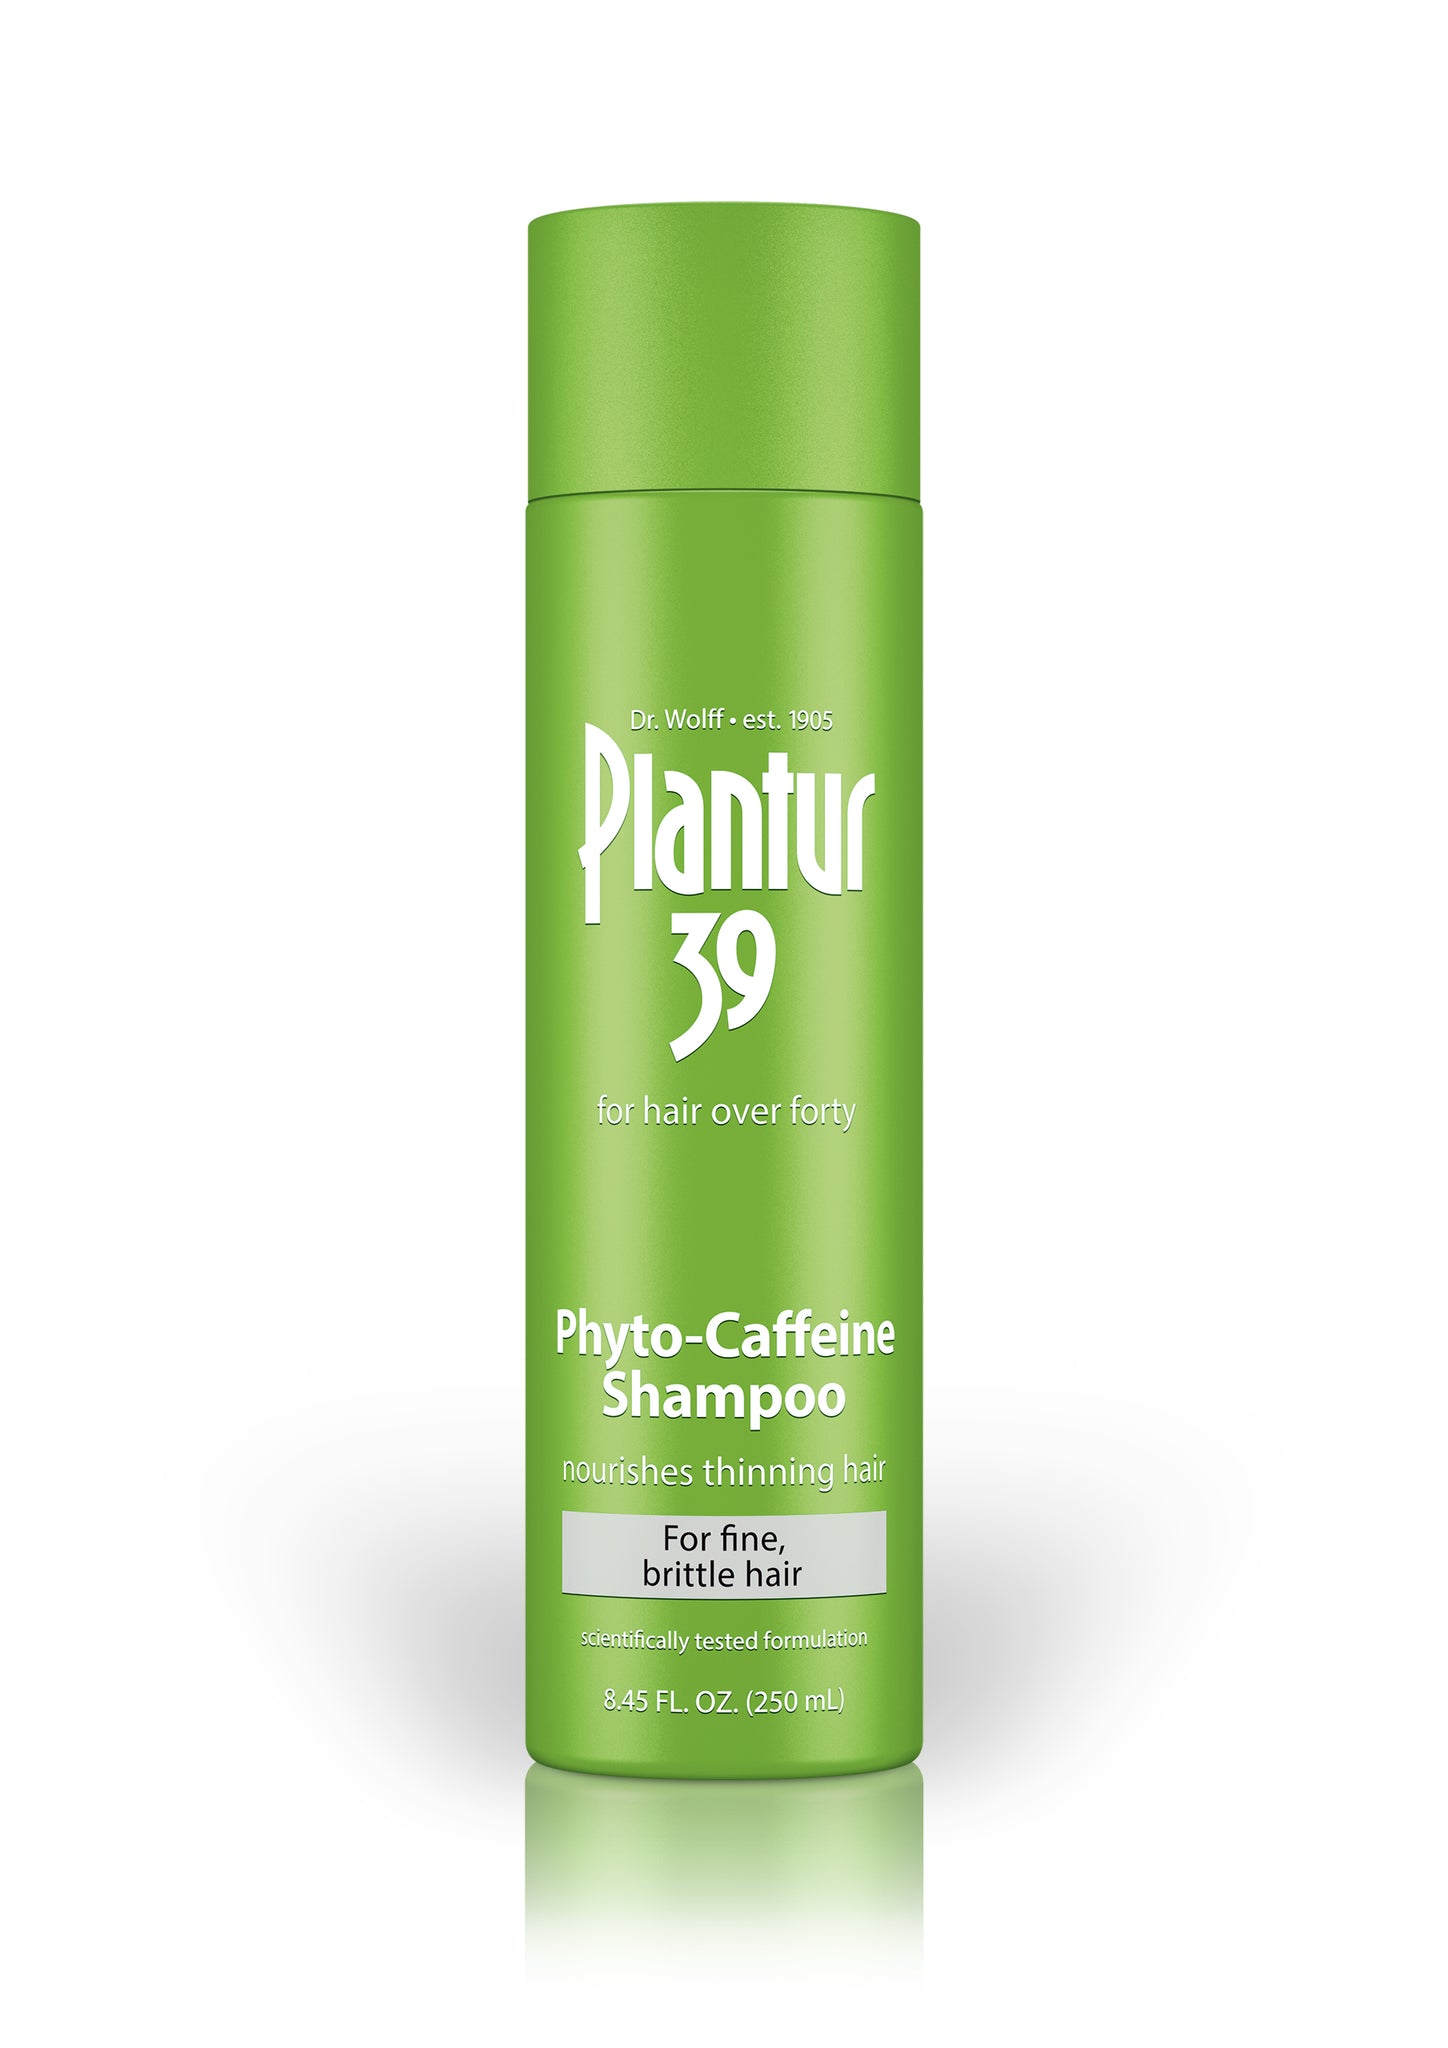 Plantur 39 Phyto-Caffeine Shampoo